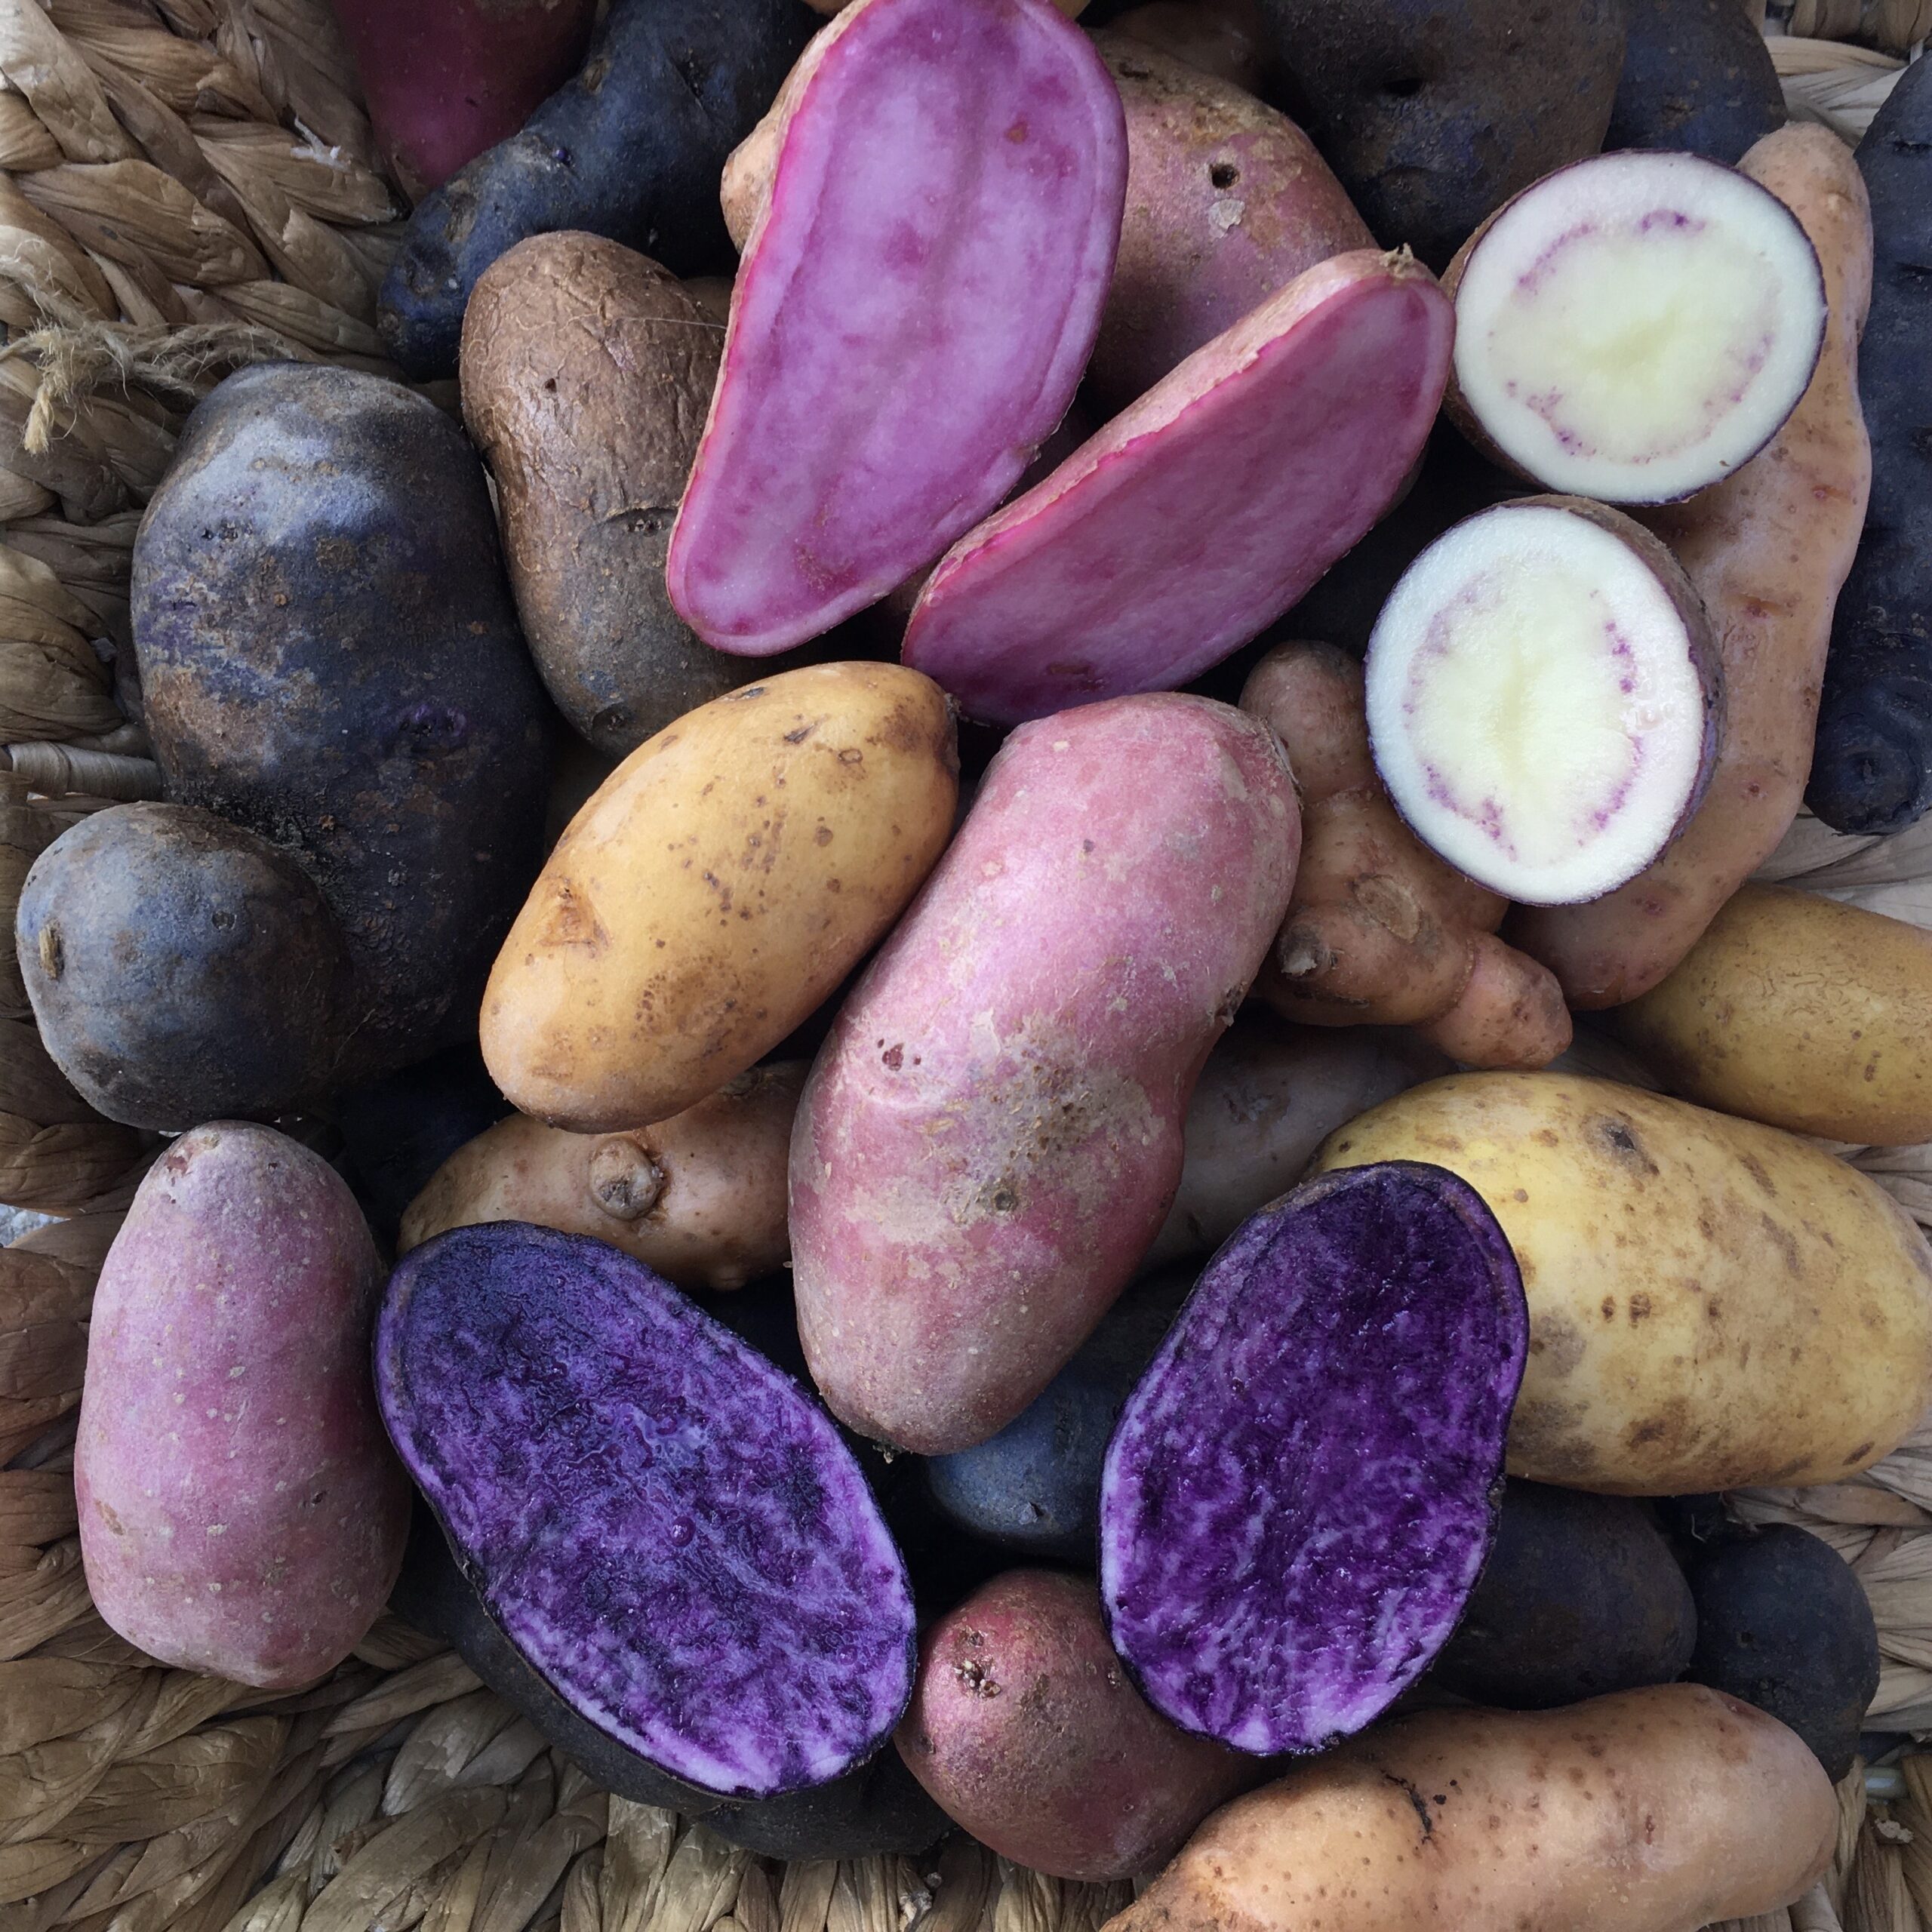 Kartoffelvielfalt